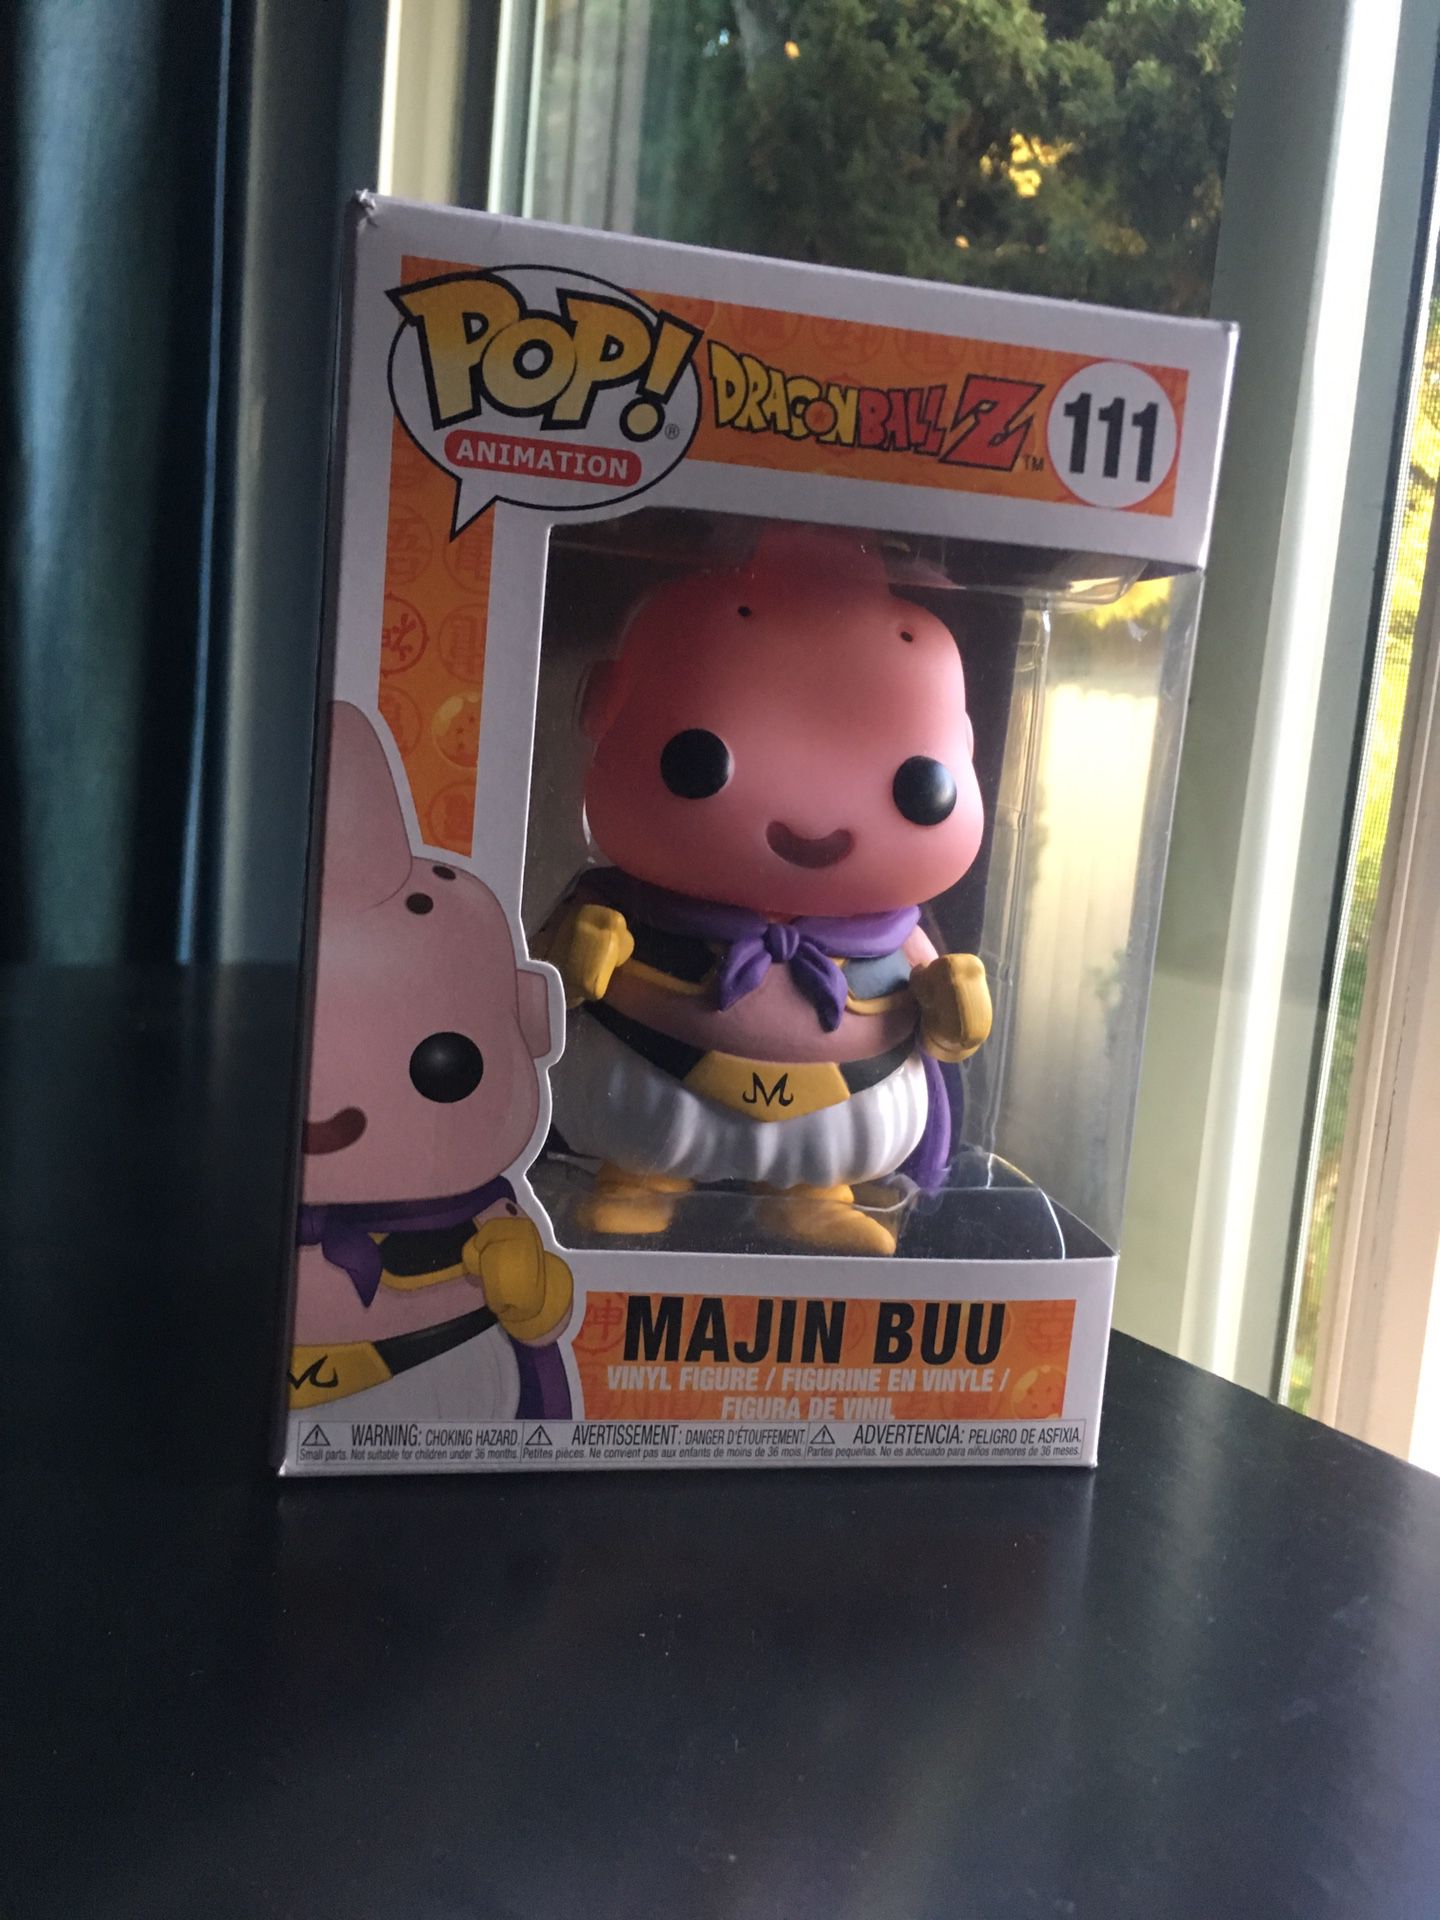 Majin Buu Dragon Ball Z Funko Pop for sale!